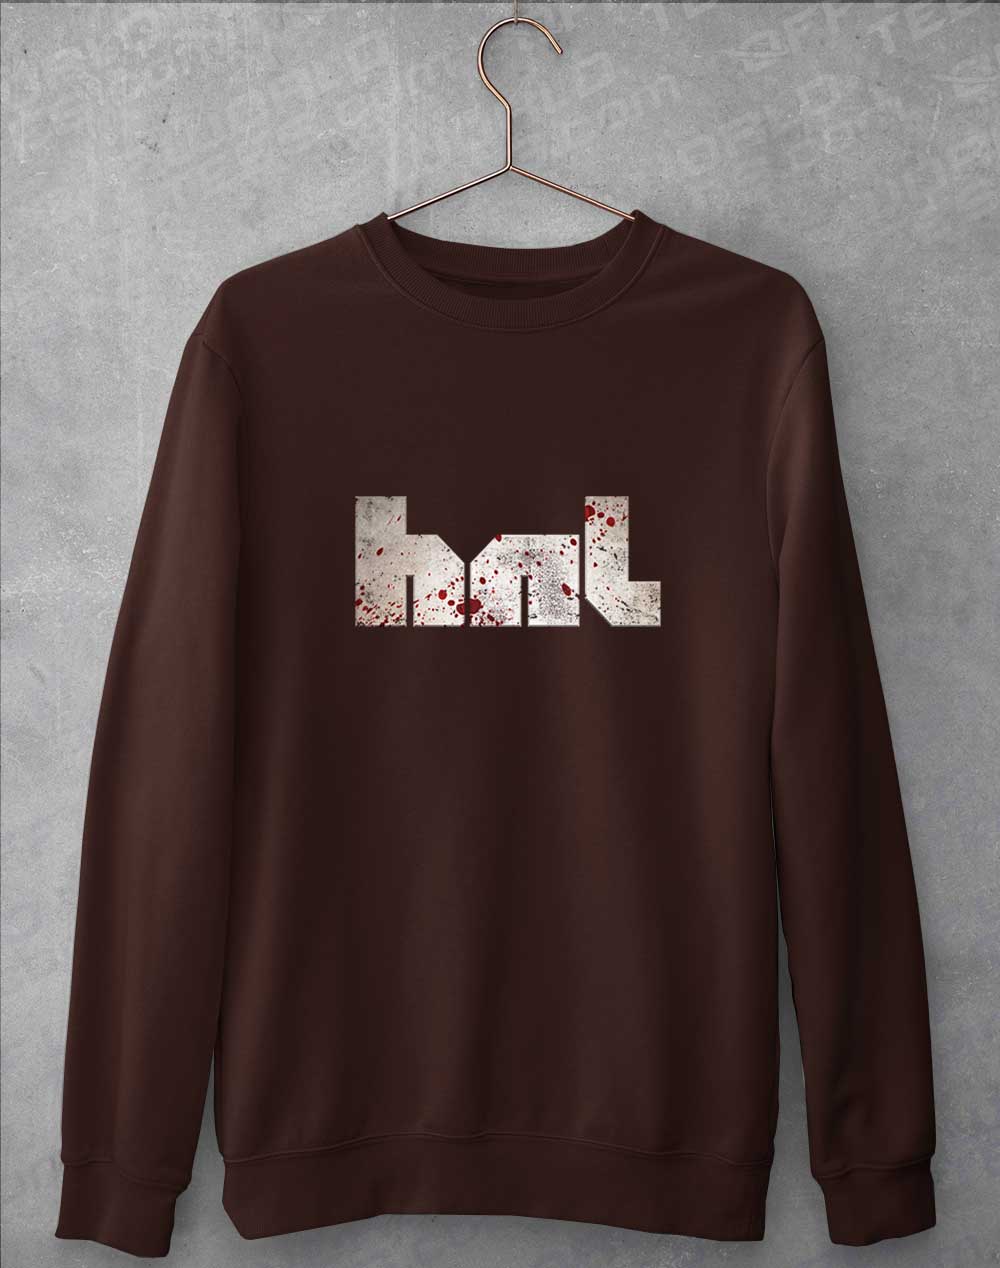 Hot Chocolate - HNL Distressed Bloddy Logo Sweatshirt